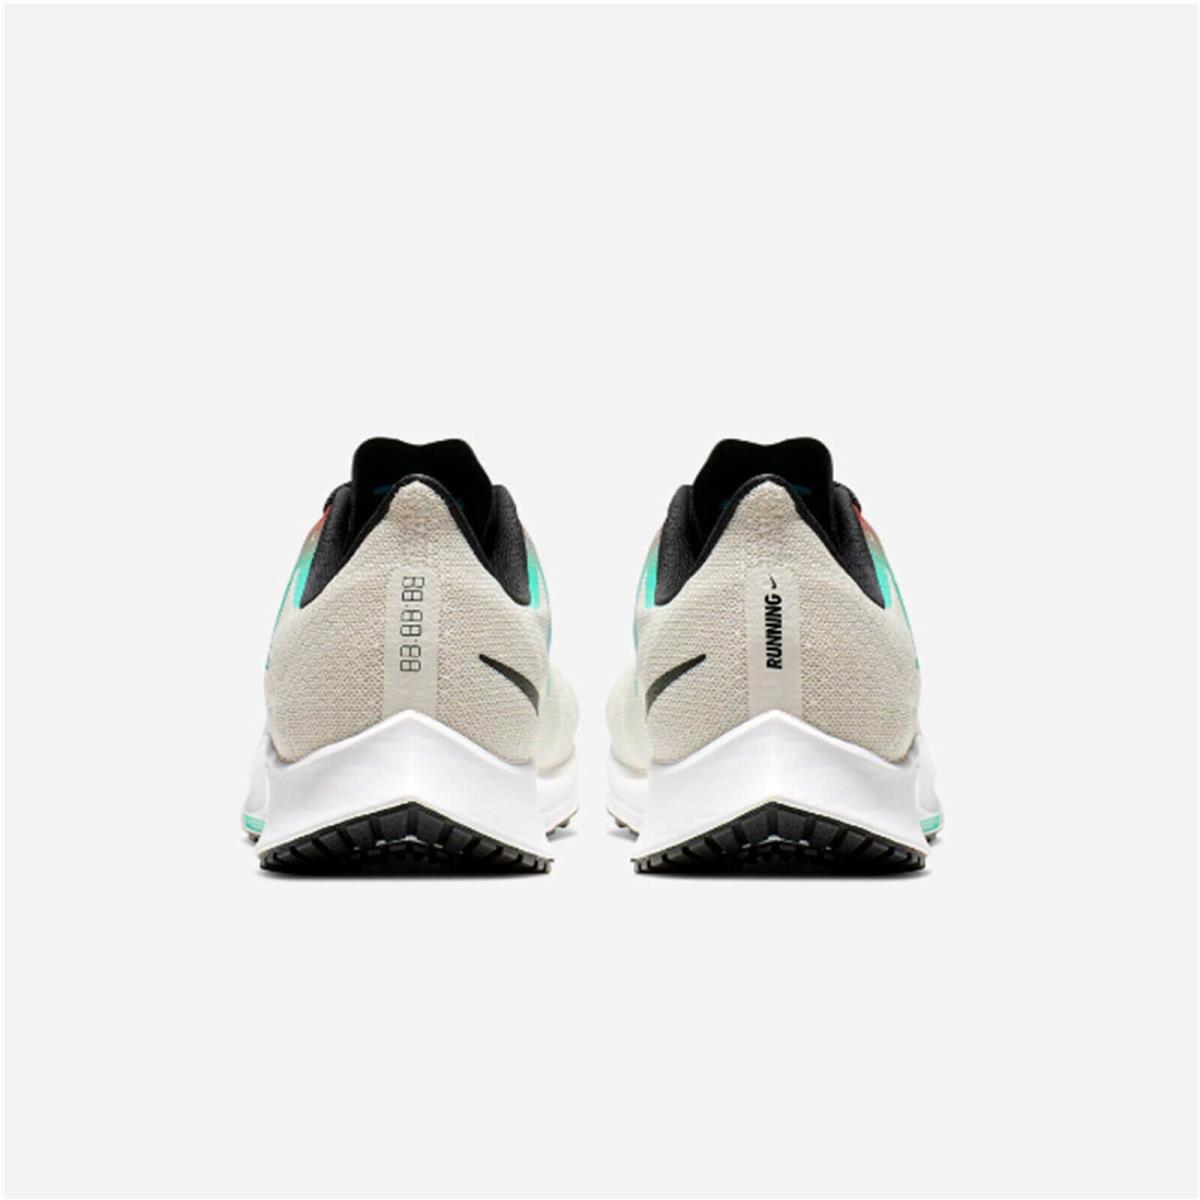 Nike shoes Zoom Fly - PALE IVORY/BLACK-HYPER JADE 6